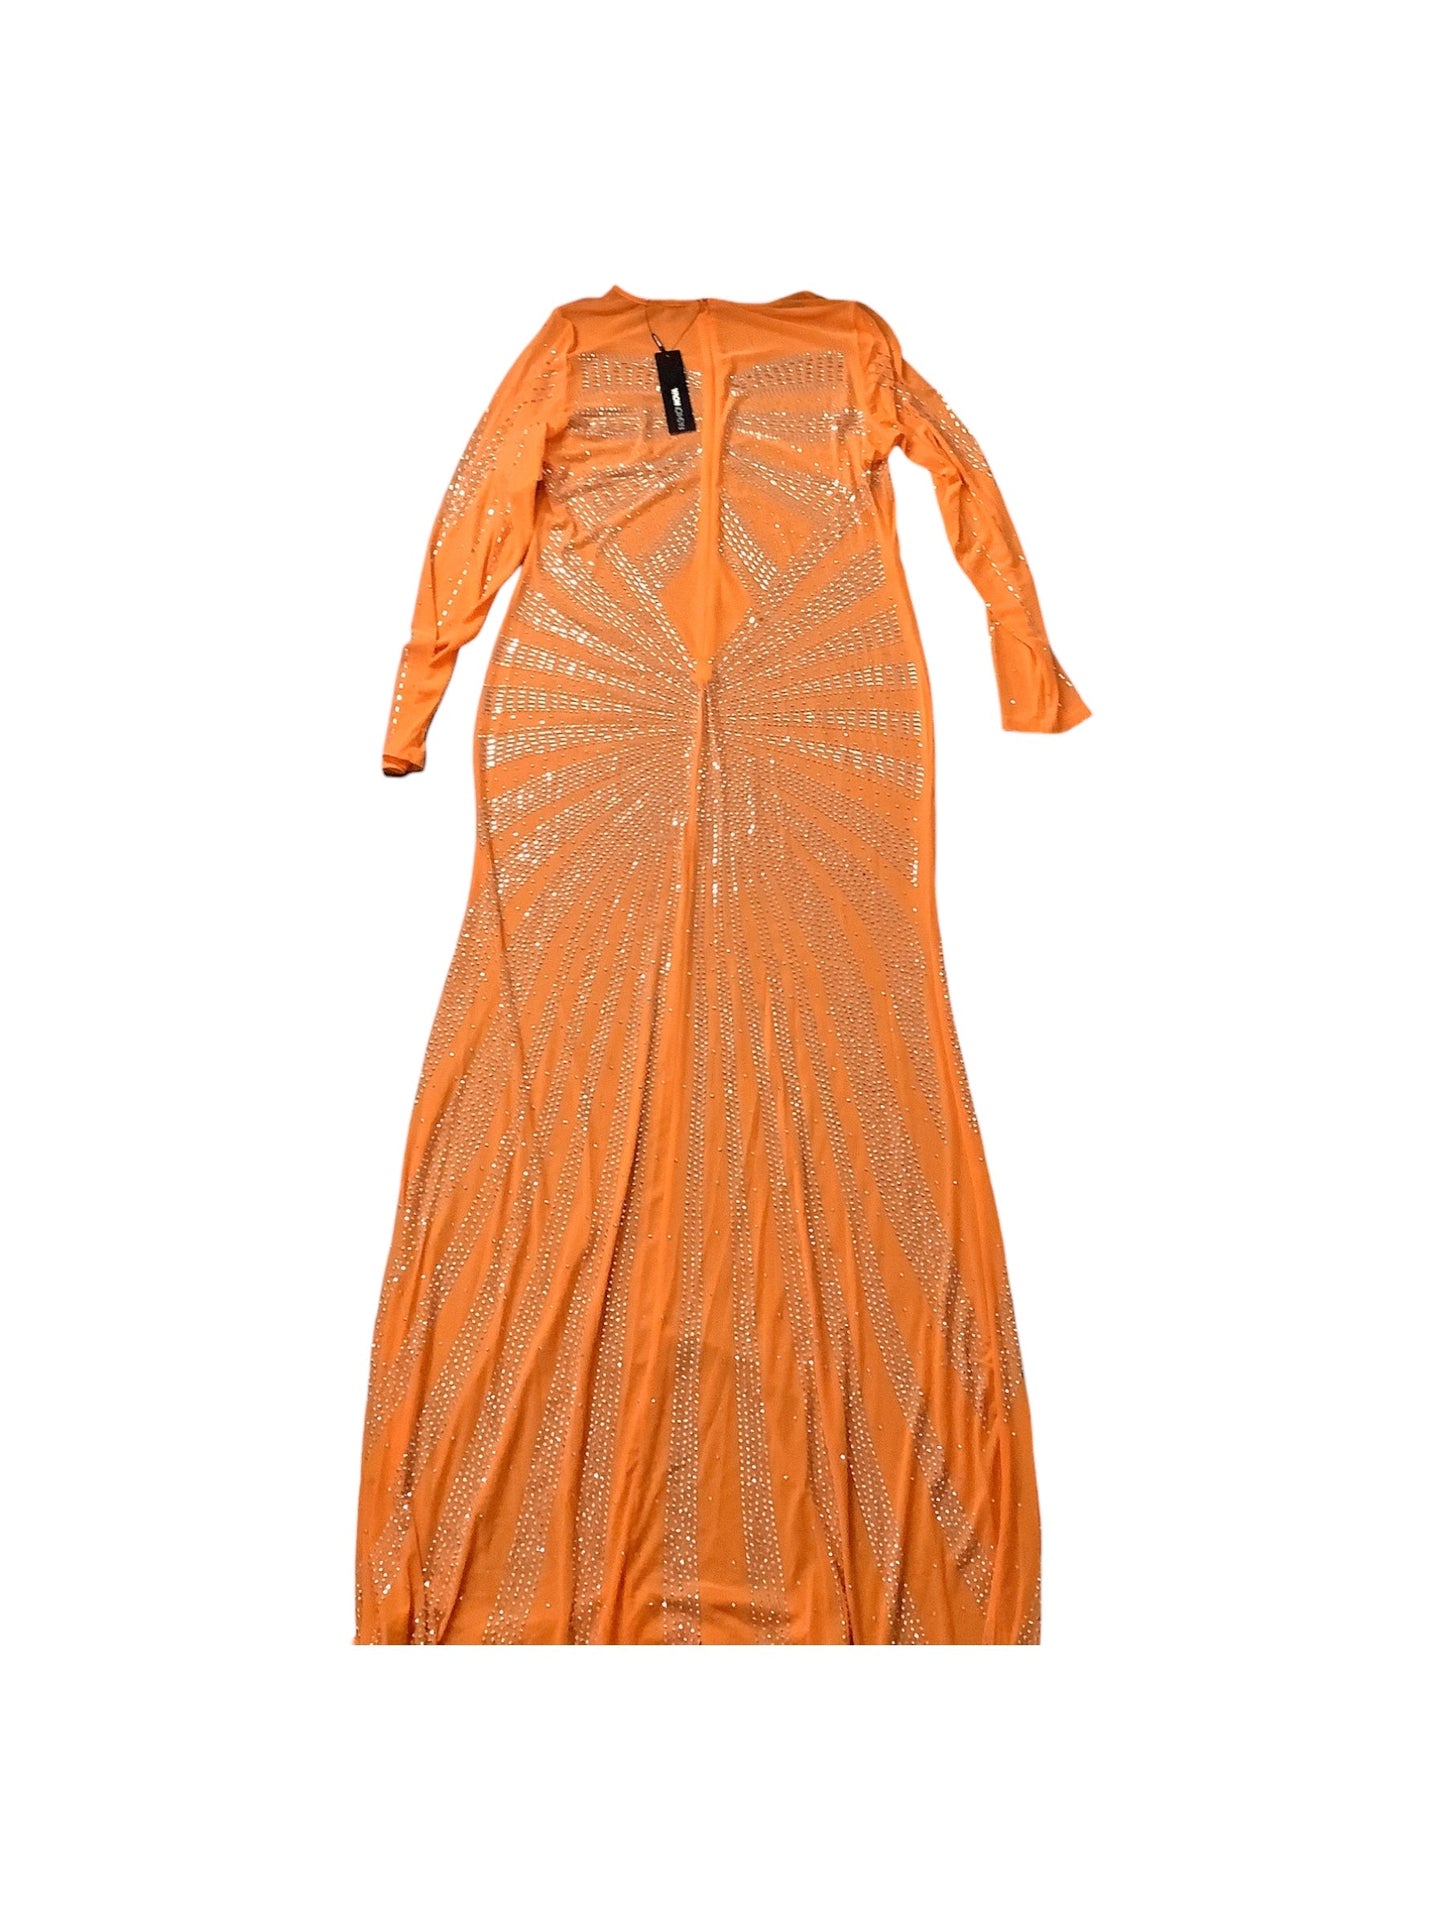 Orange Dress Casual Maxi Fashion Nova, Size 1x